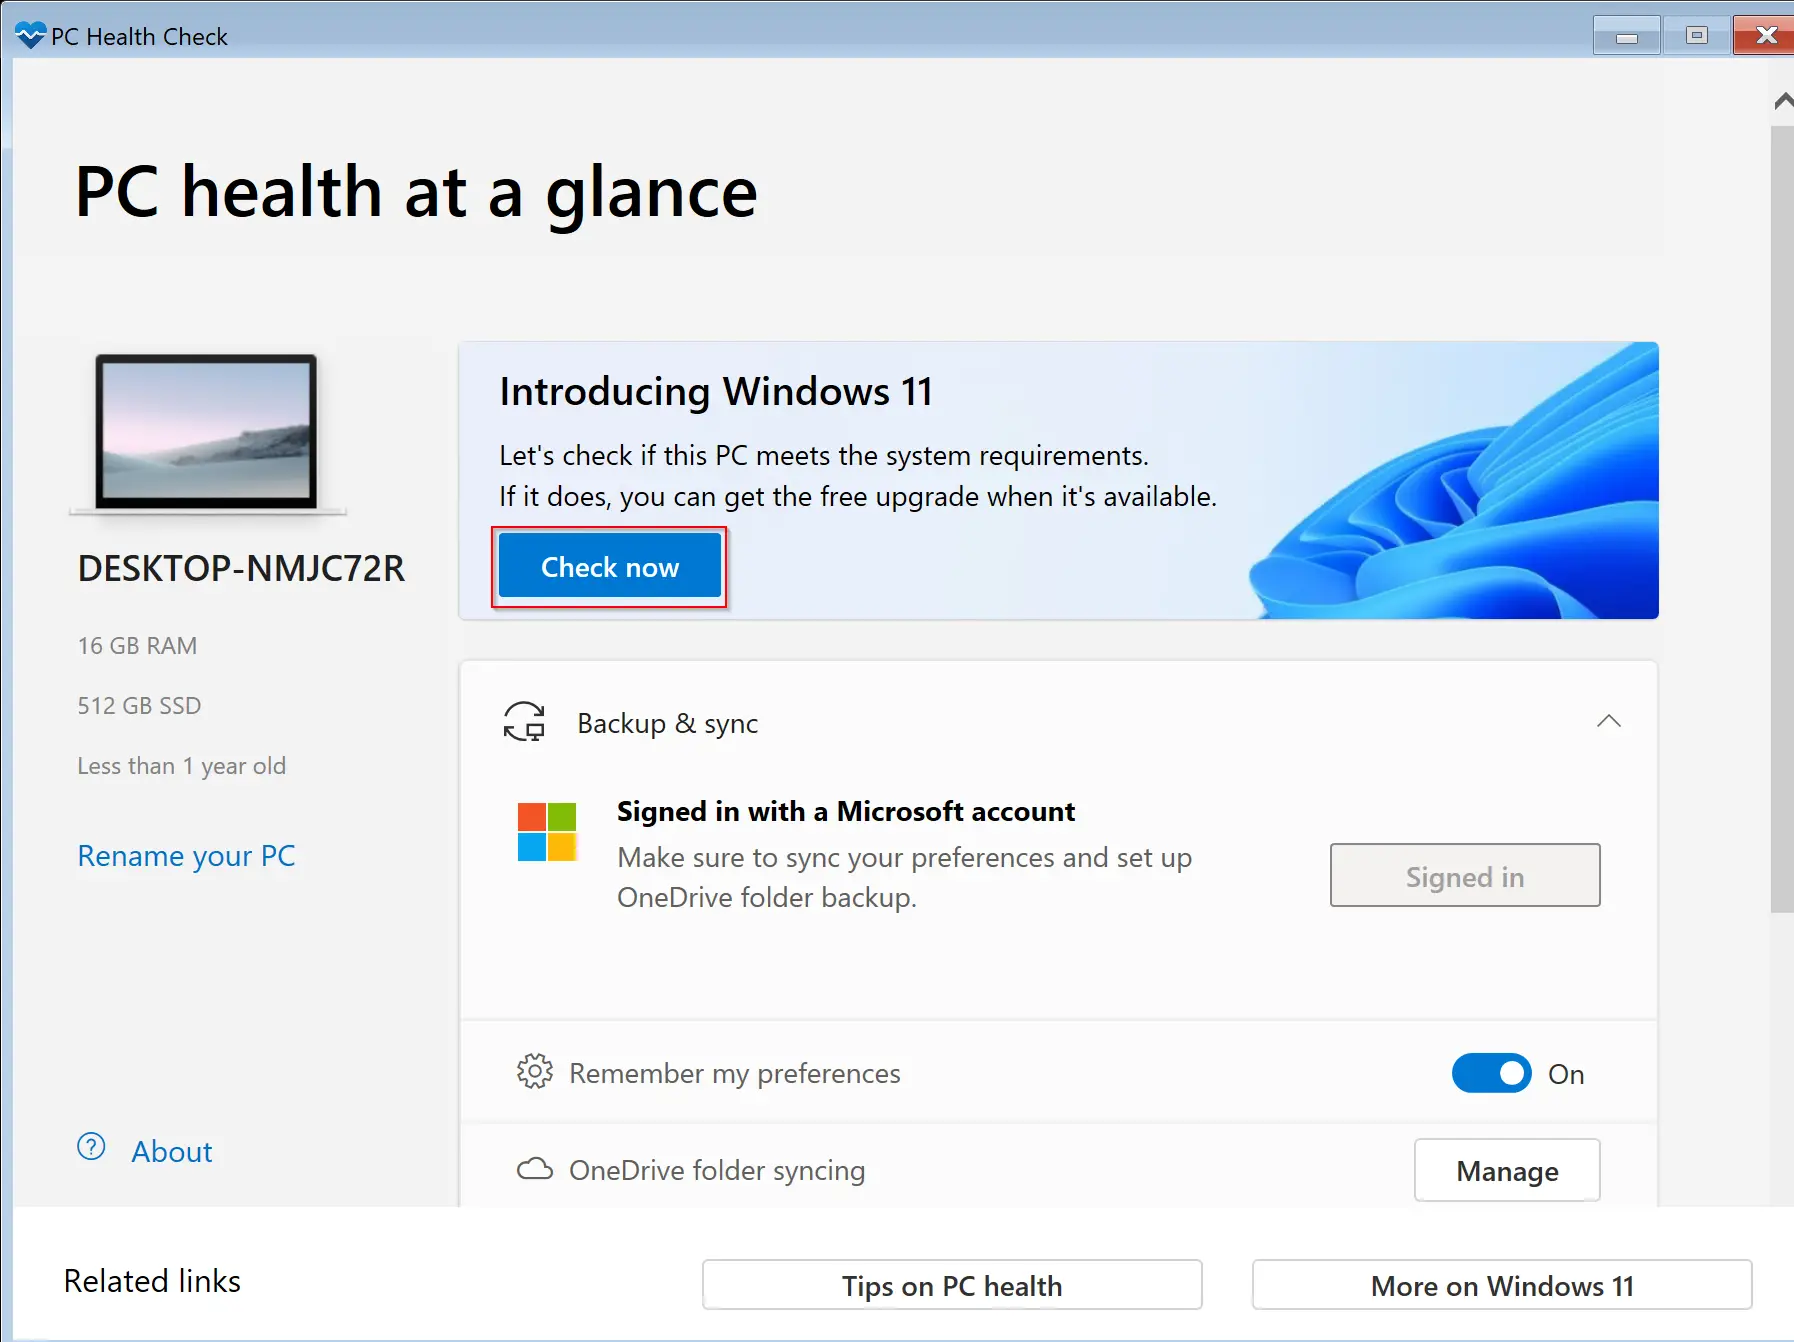 pc health check app windows 11 free download